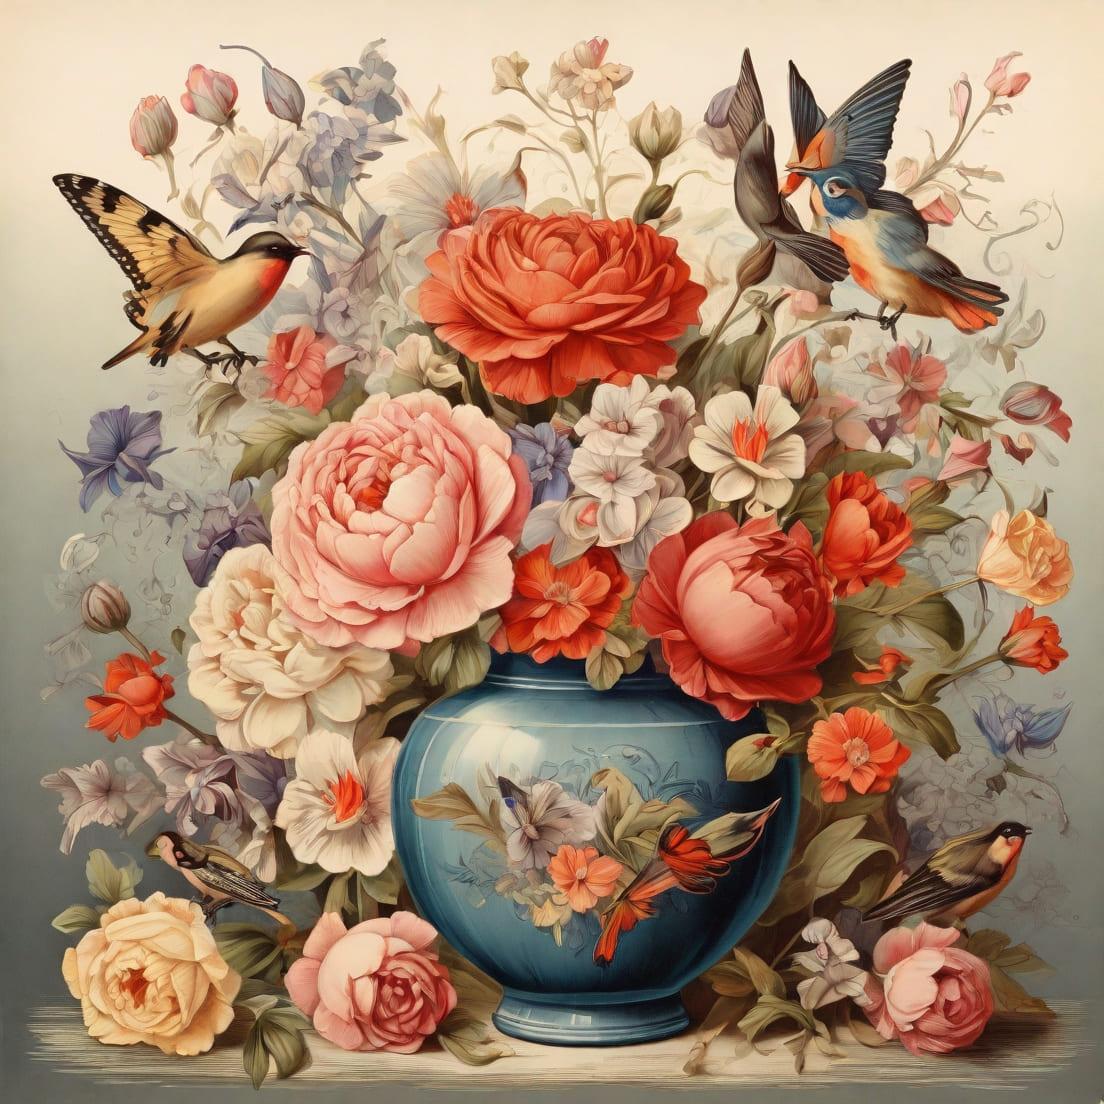 postcard, bouquet of flowers, vase, birds, butterflies preview image.